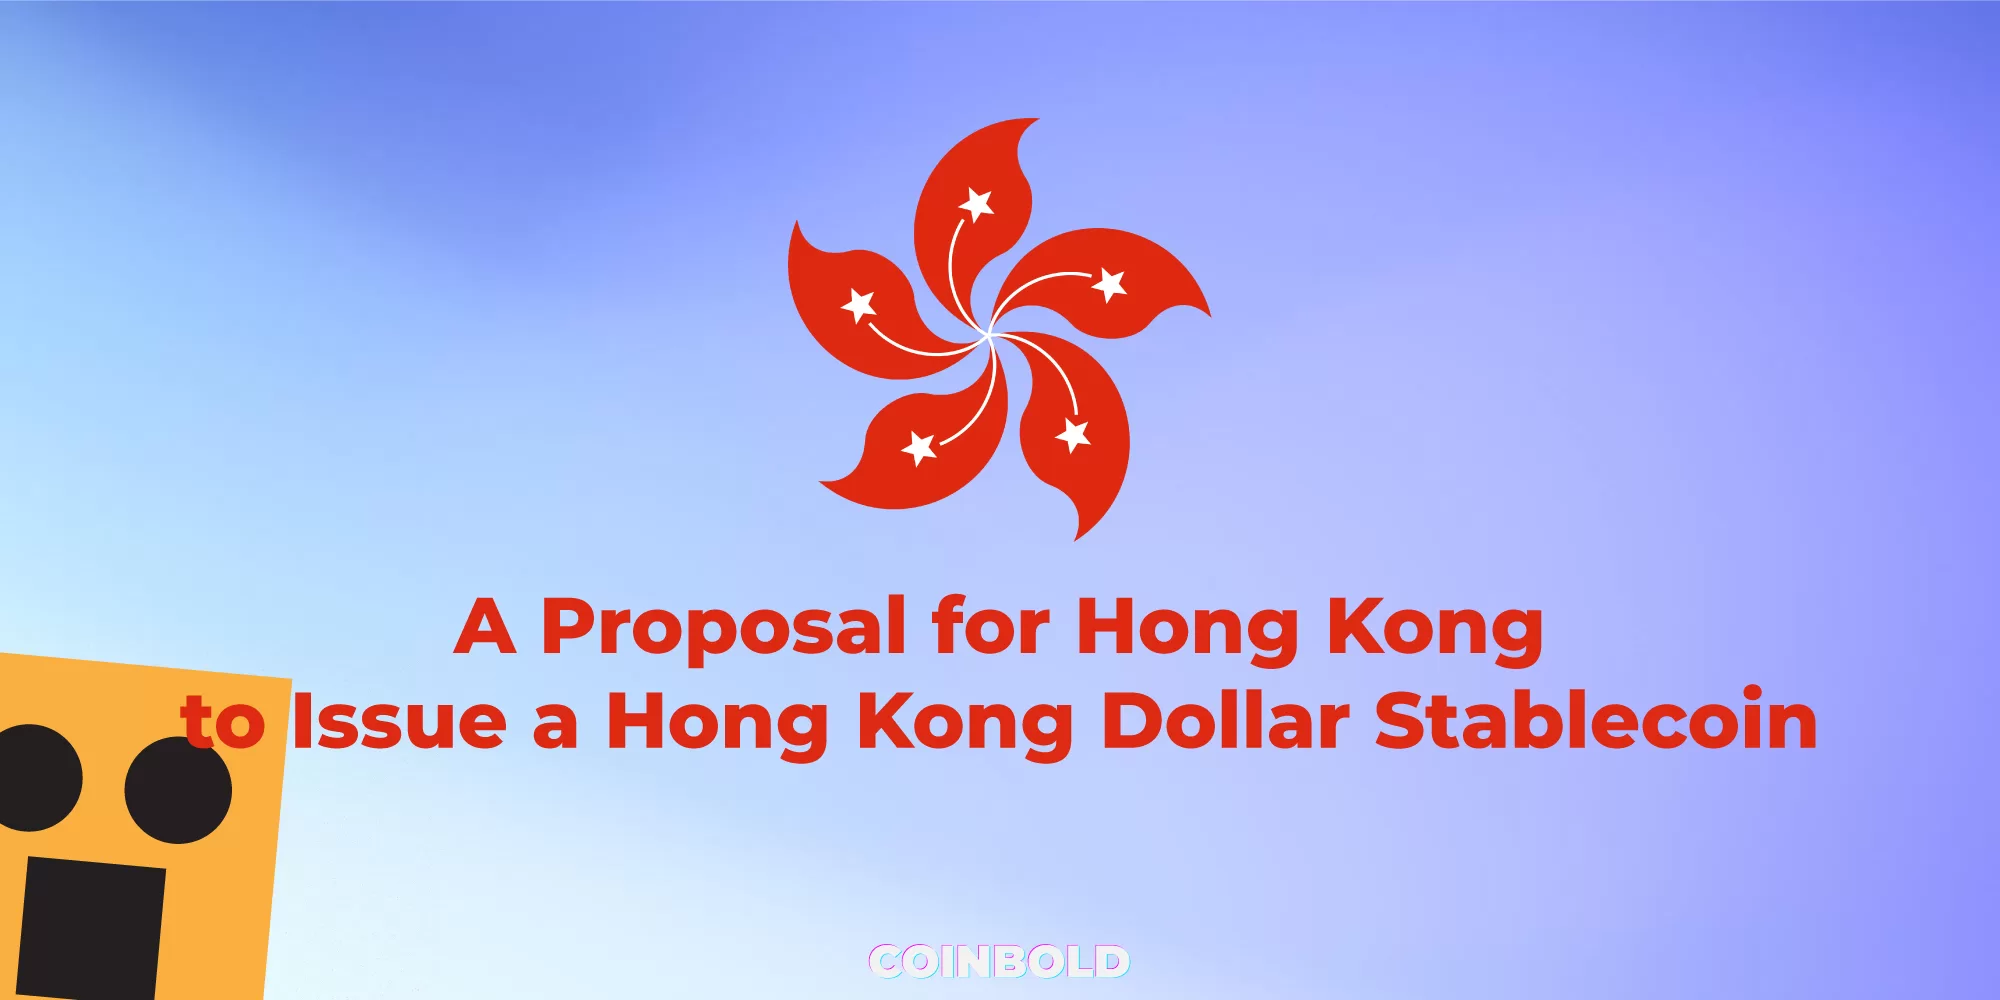 A Proposal for Hong Kong to Issue a Hong Kong Dollar Stablecoin